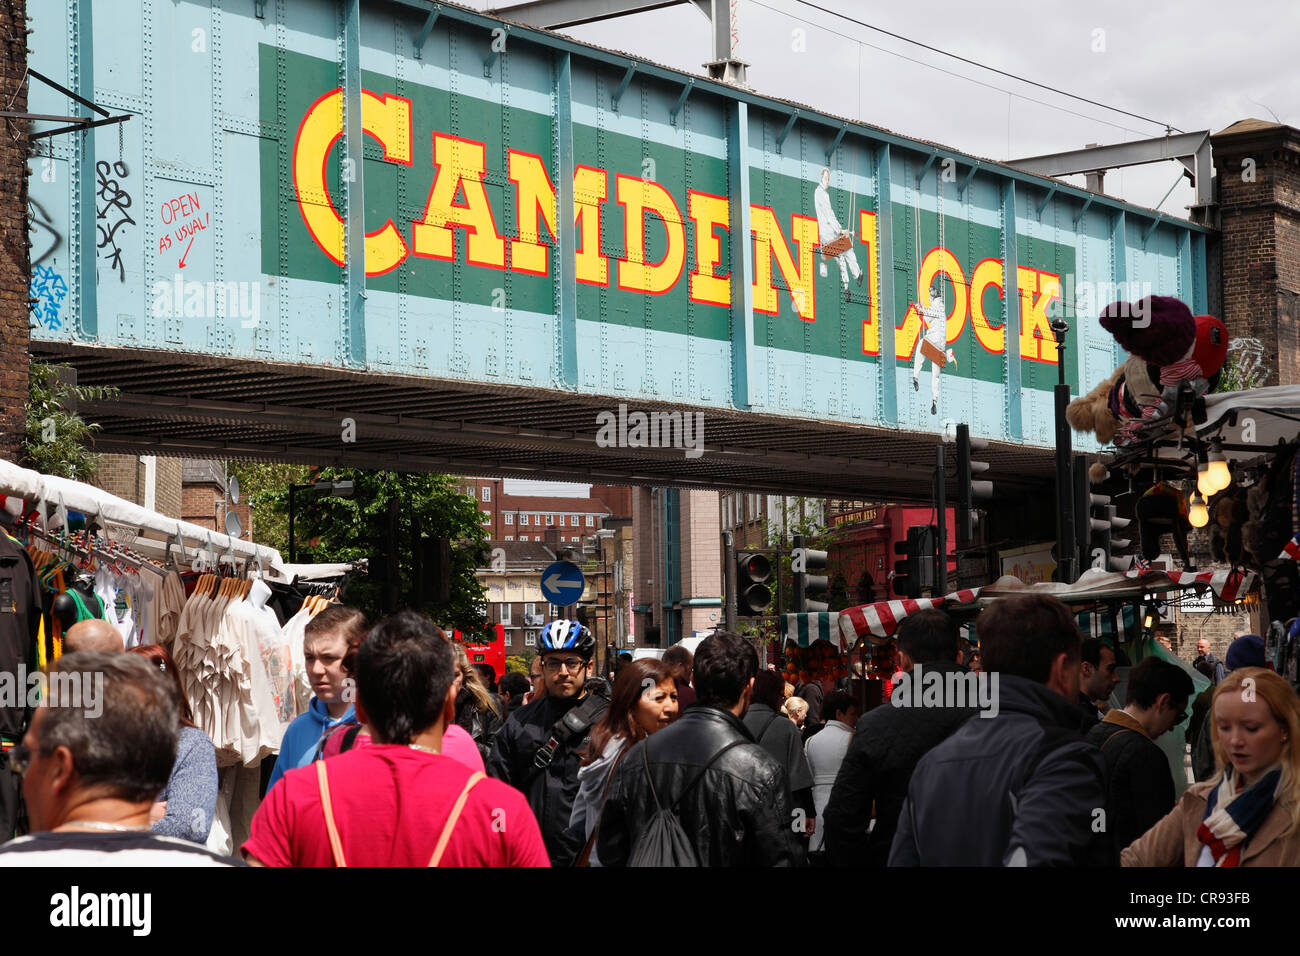 Camden Lock, Camden Town, London, England, U.K. Stock Photo